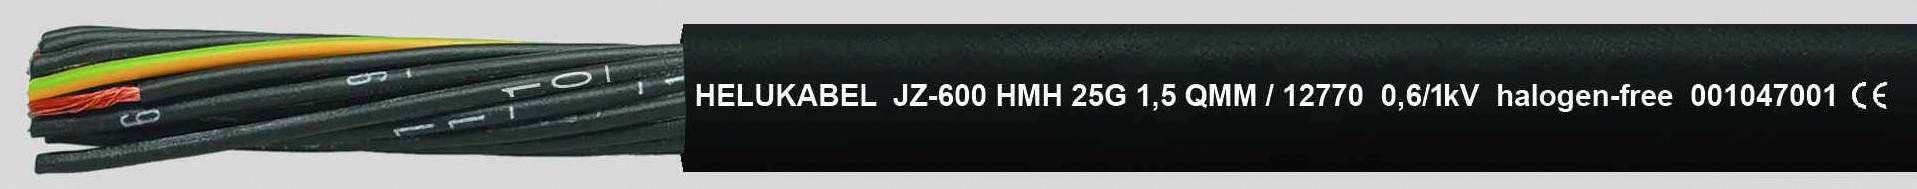 HELUKABEL JZ-500 HMH Steuerleitung 4 x 1.50 mm² Schwarz 12763-500 500 m